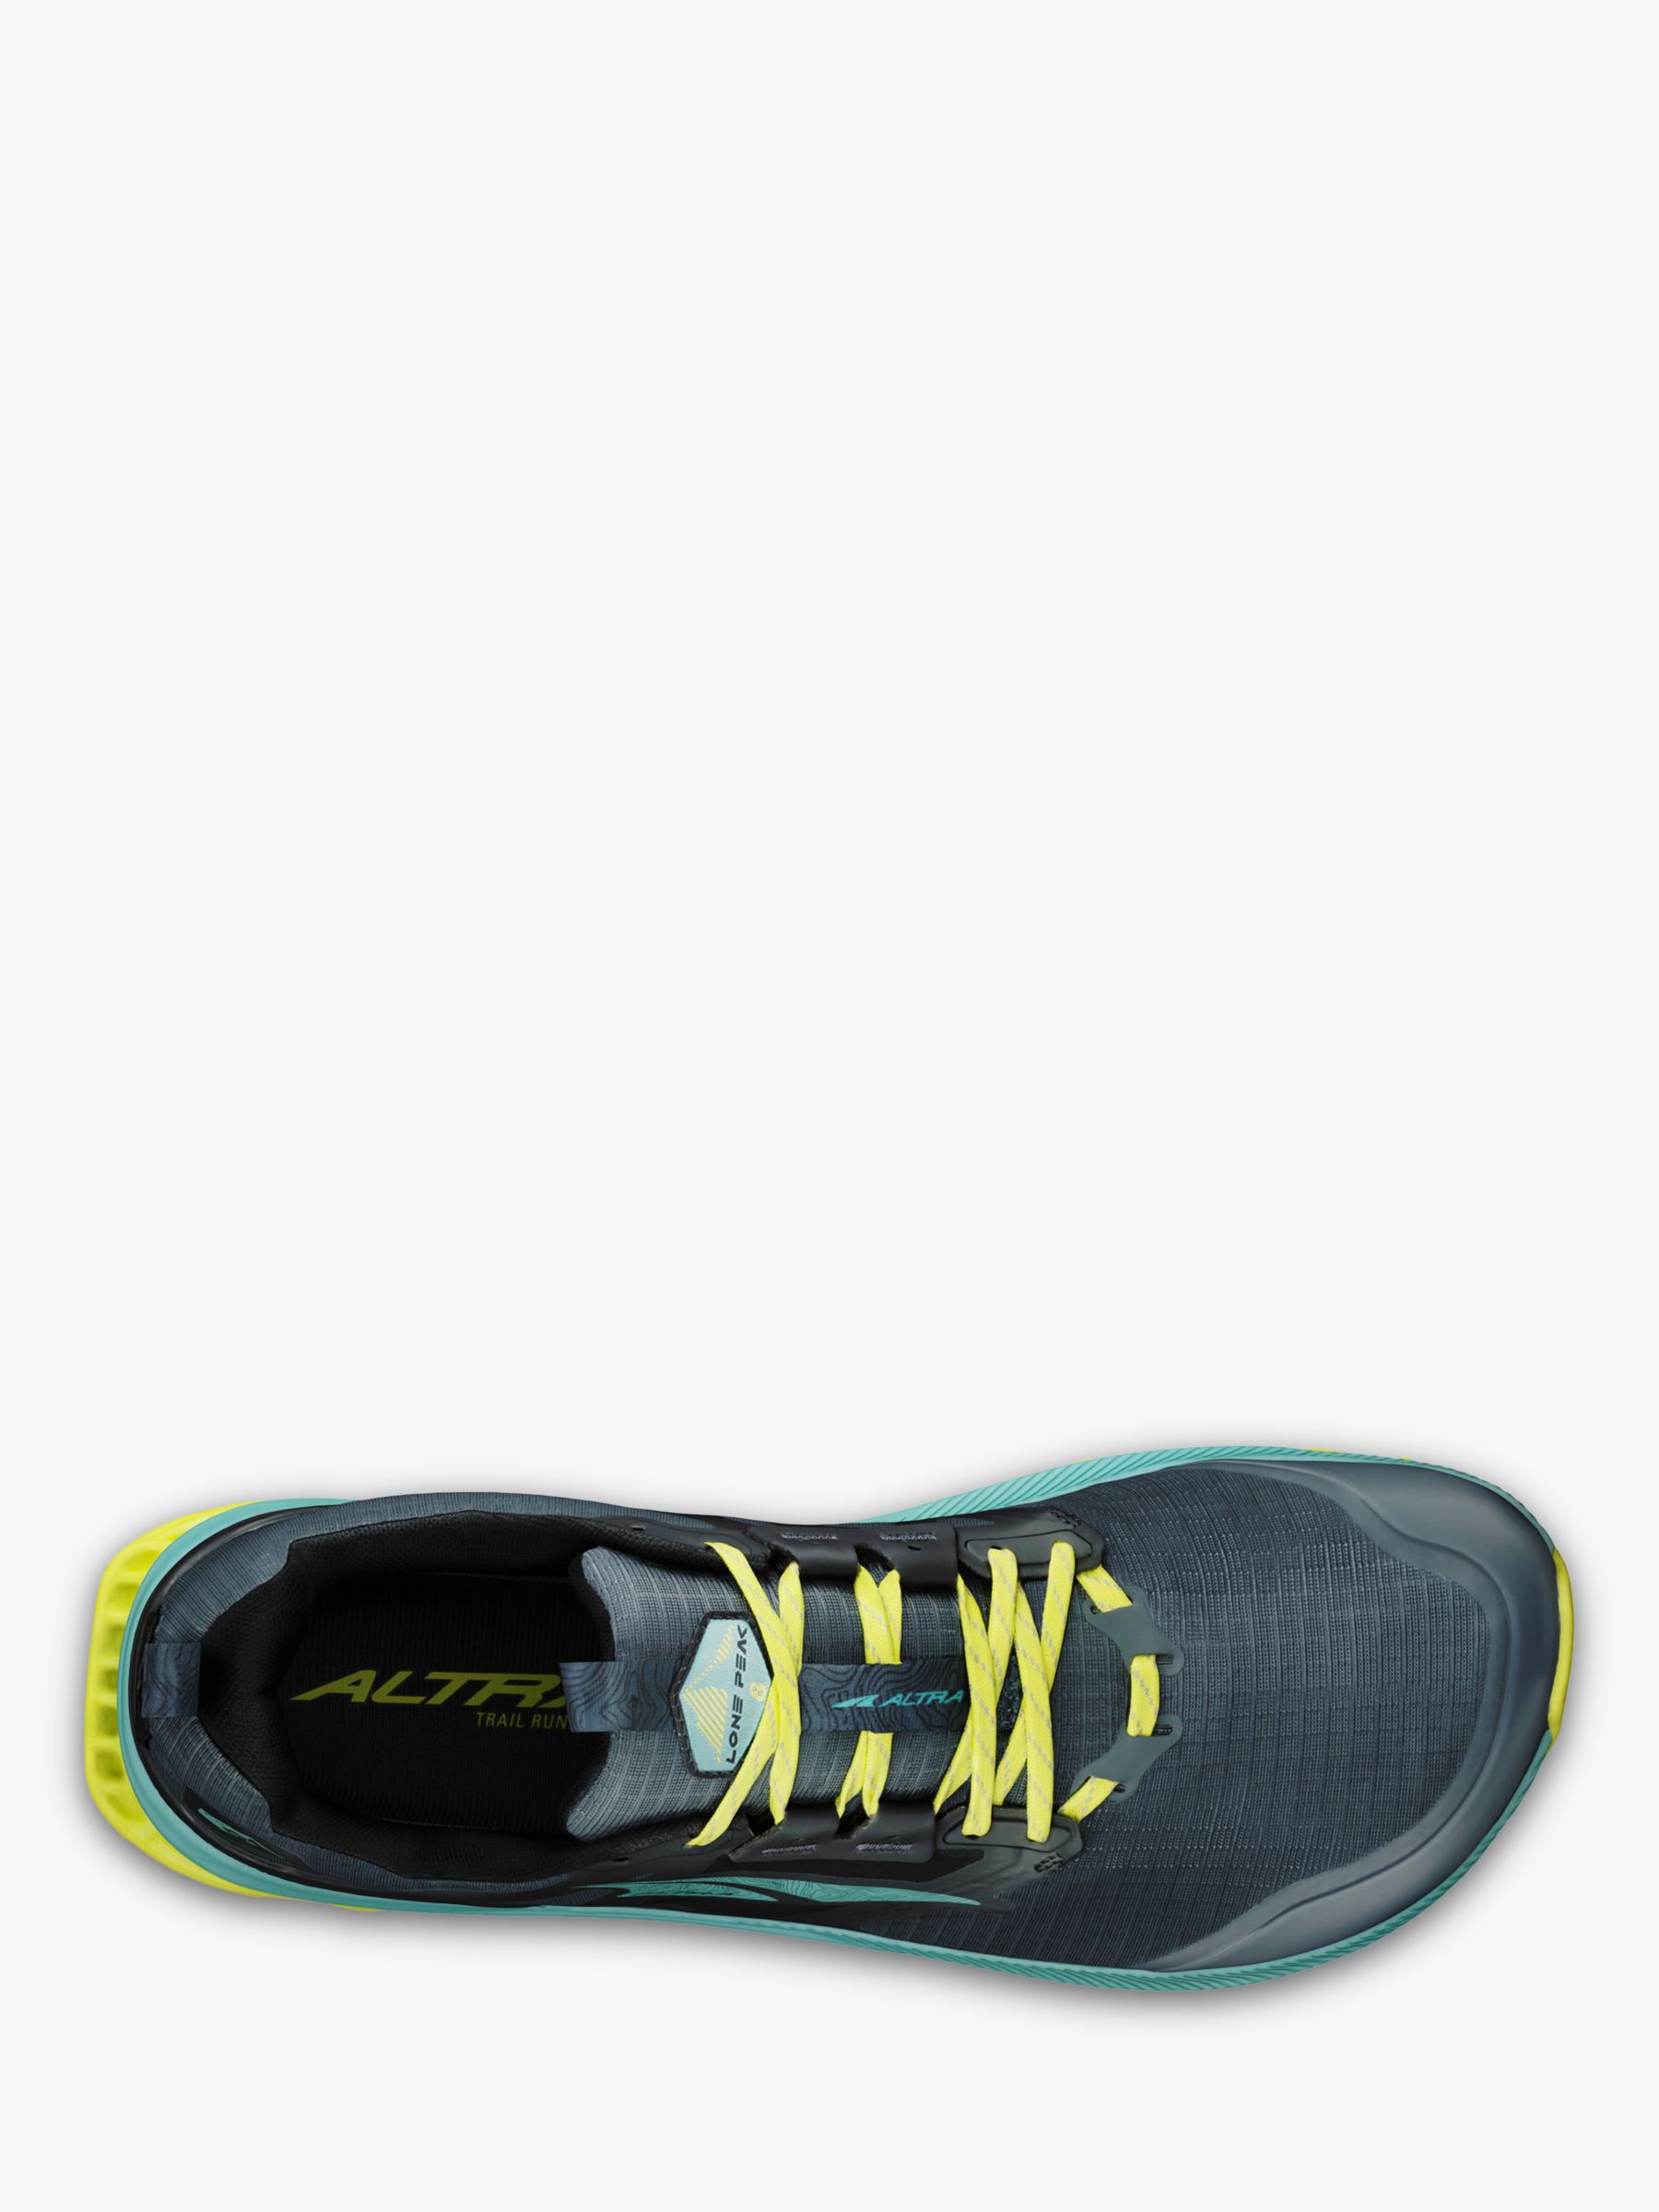 Altra Lone Peak 8  2 Men's Trail Running Shoes, Black/Green, 10